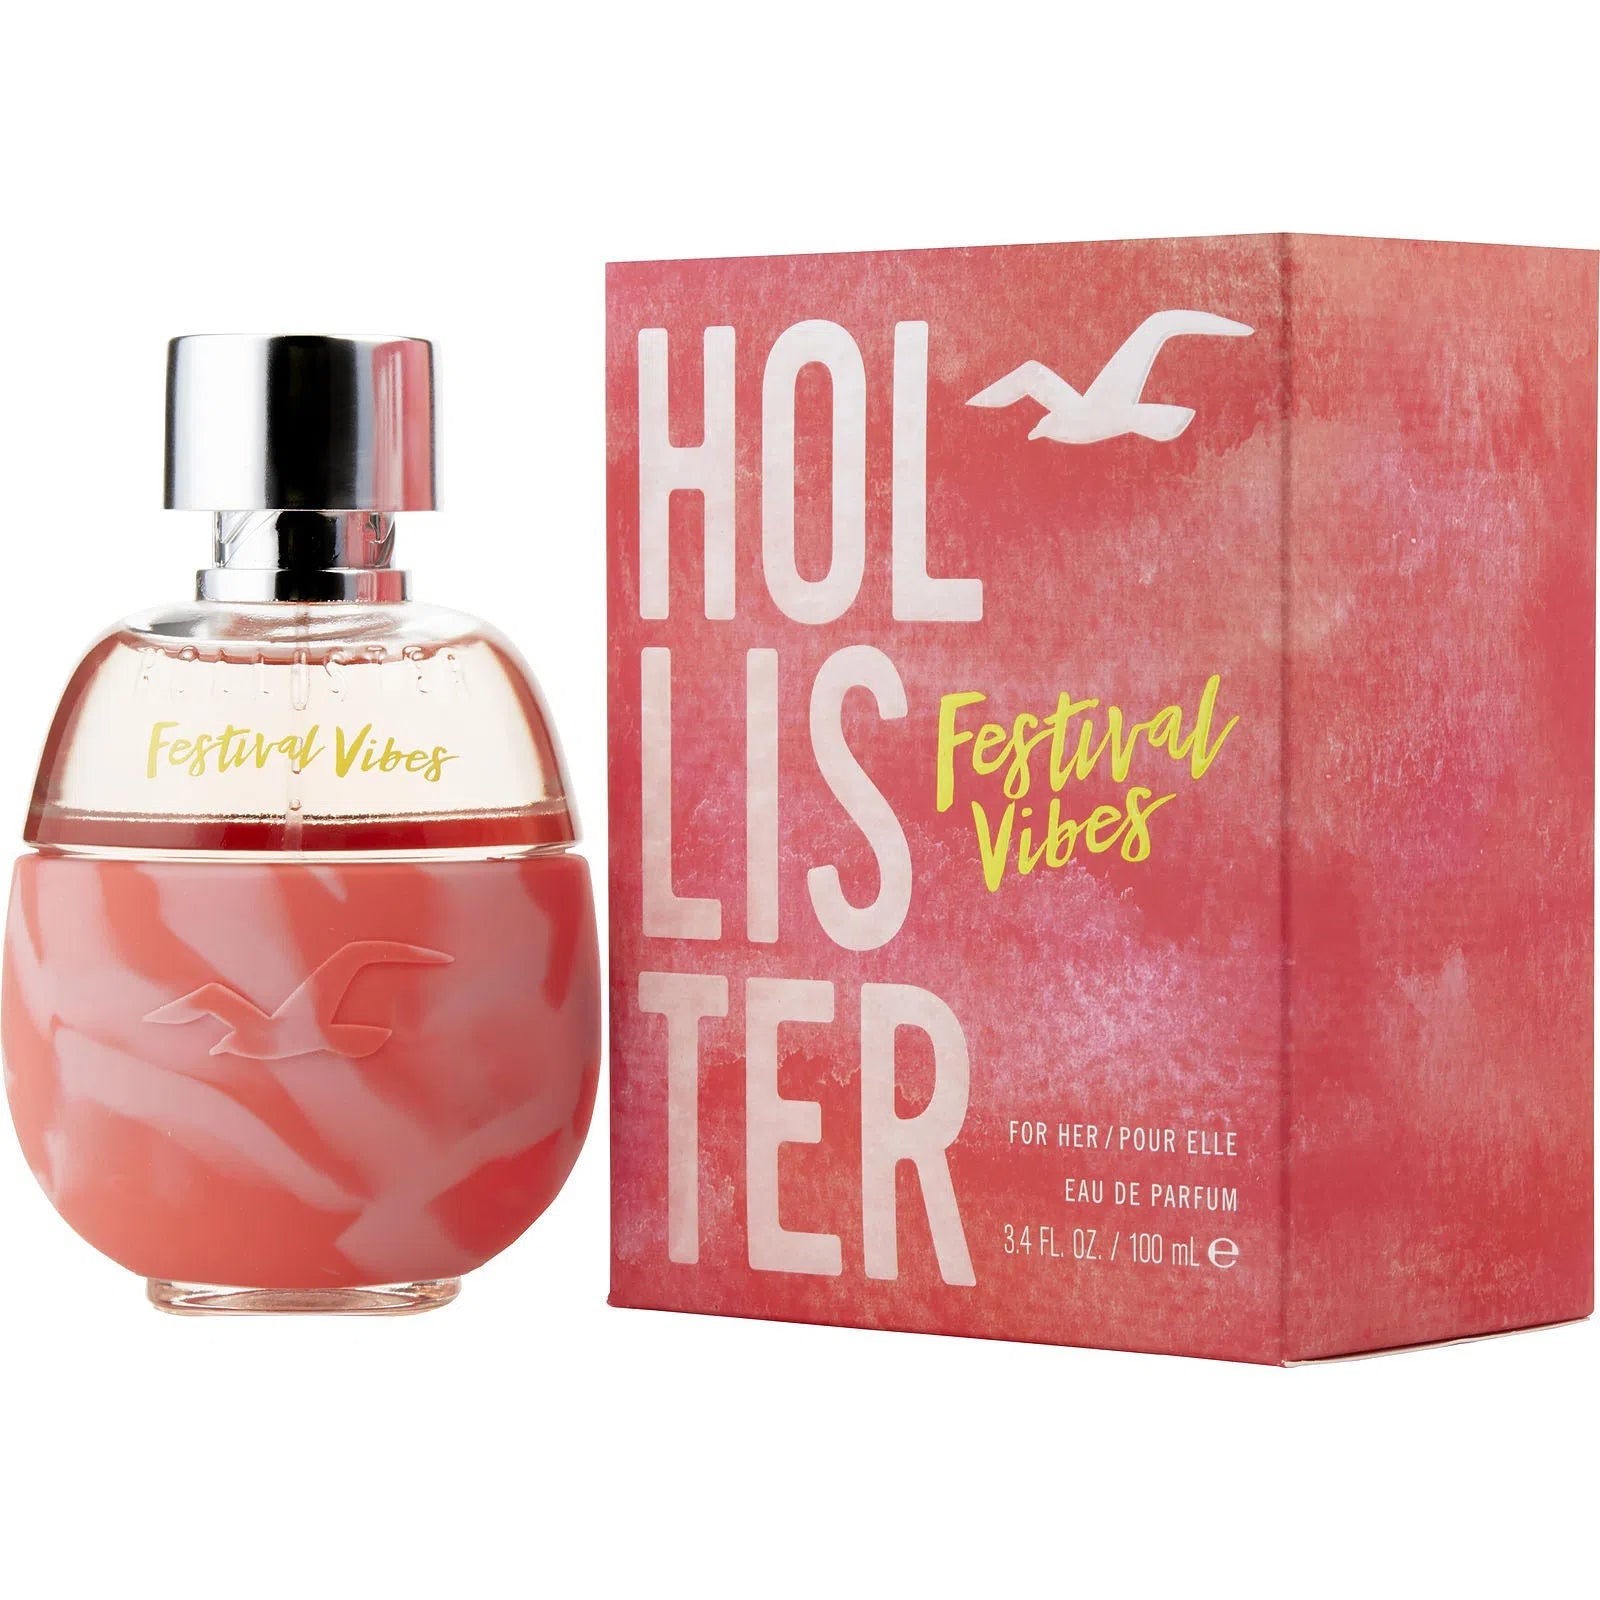 Perfume Hollister Festival Vibes EDP (W) / 100 ml - 085715268013- Prive Perfumes Honduras